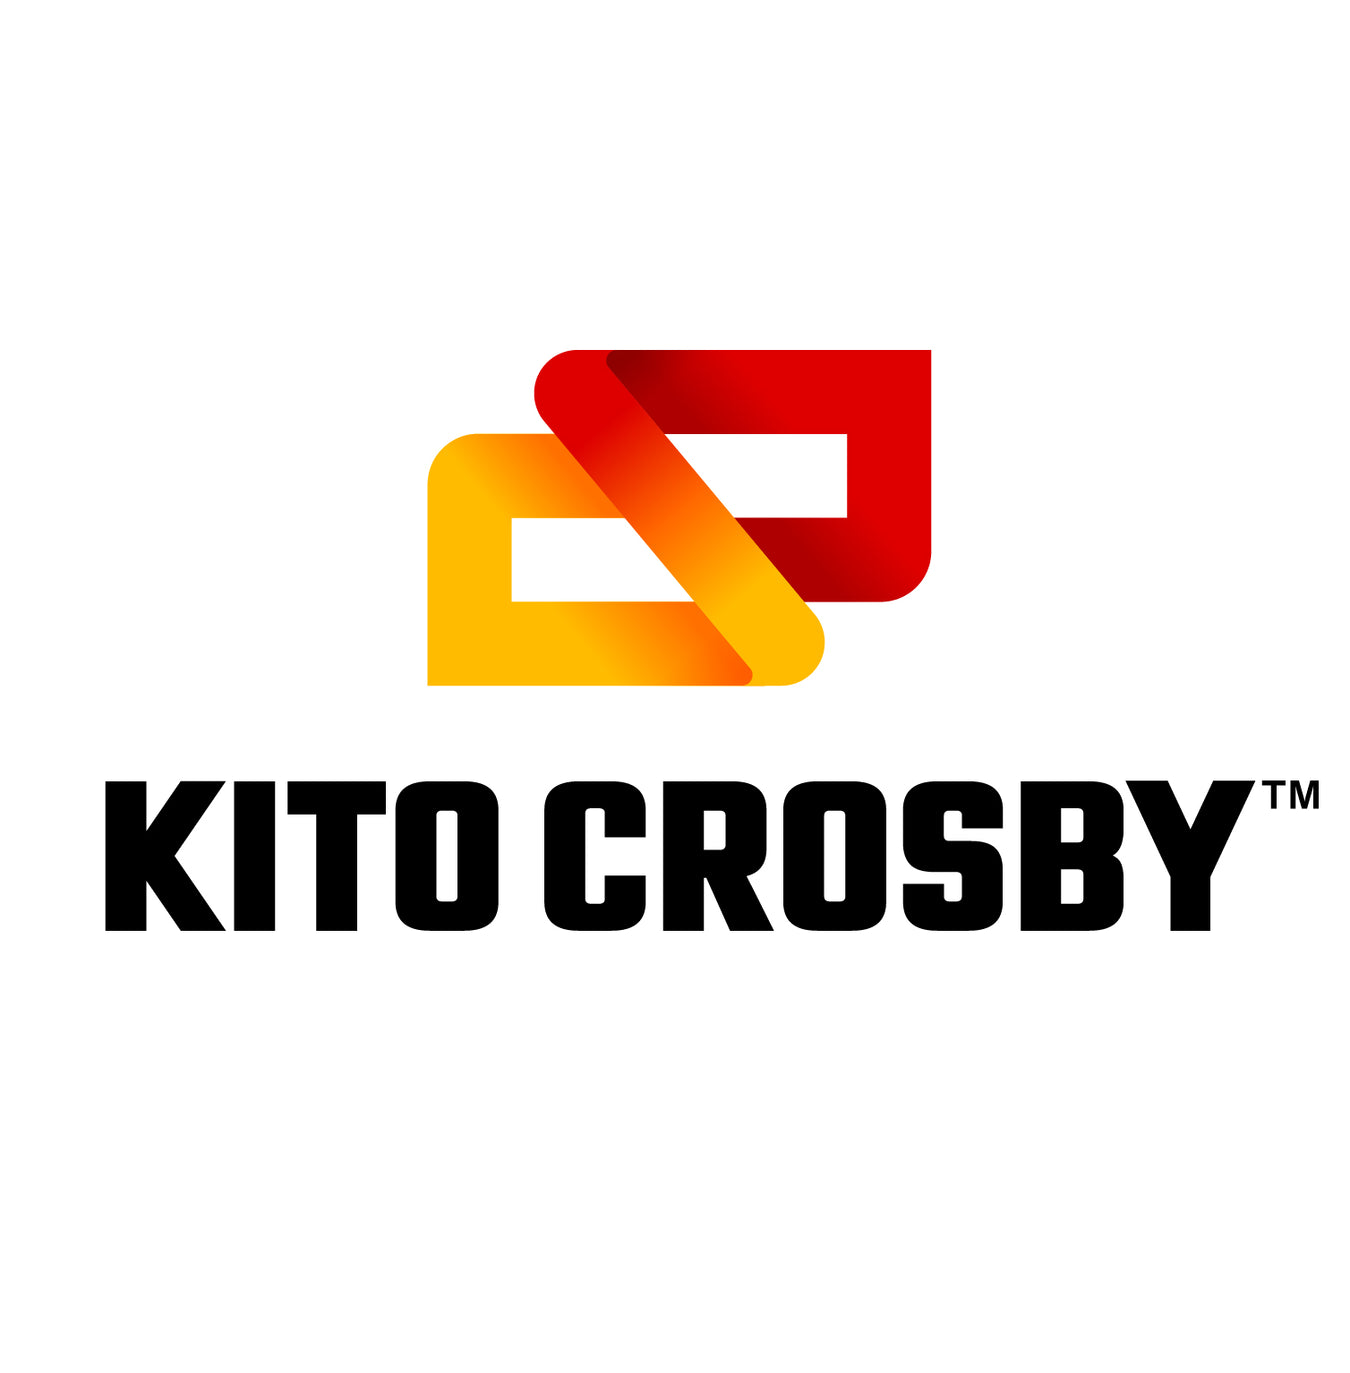 Kito Crosby